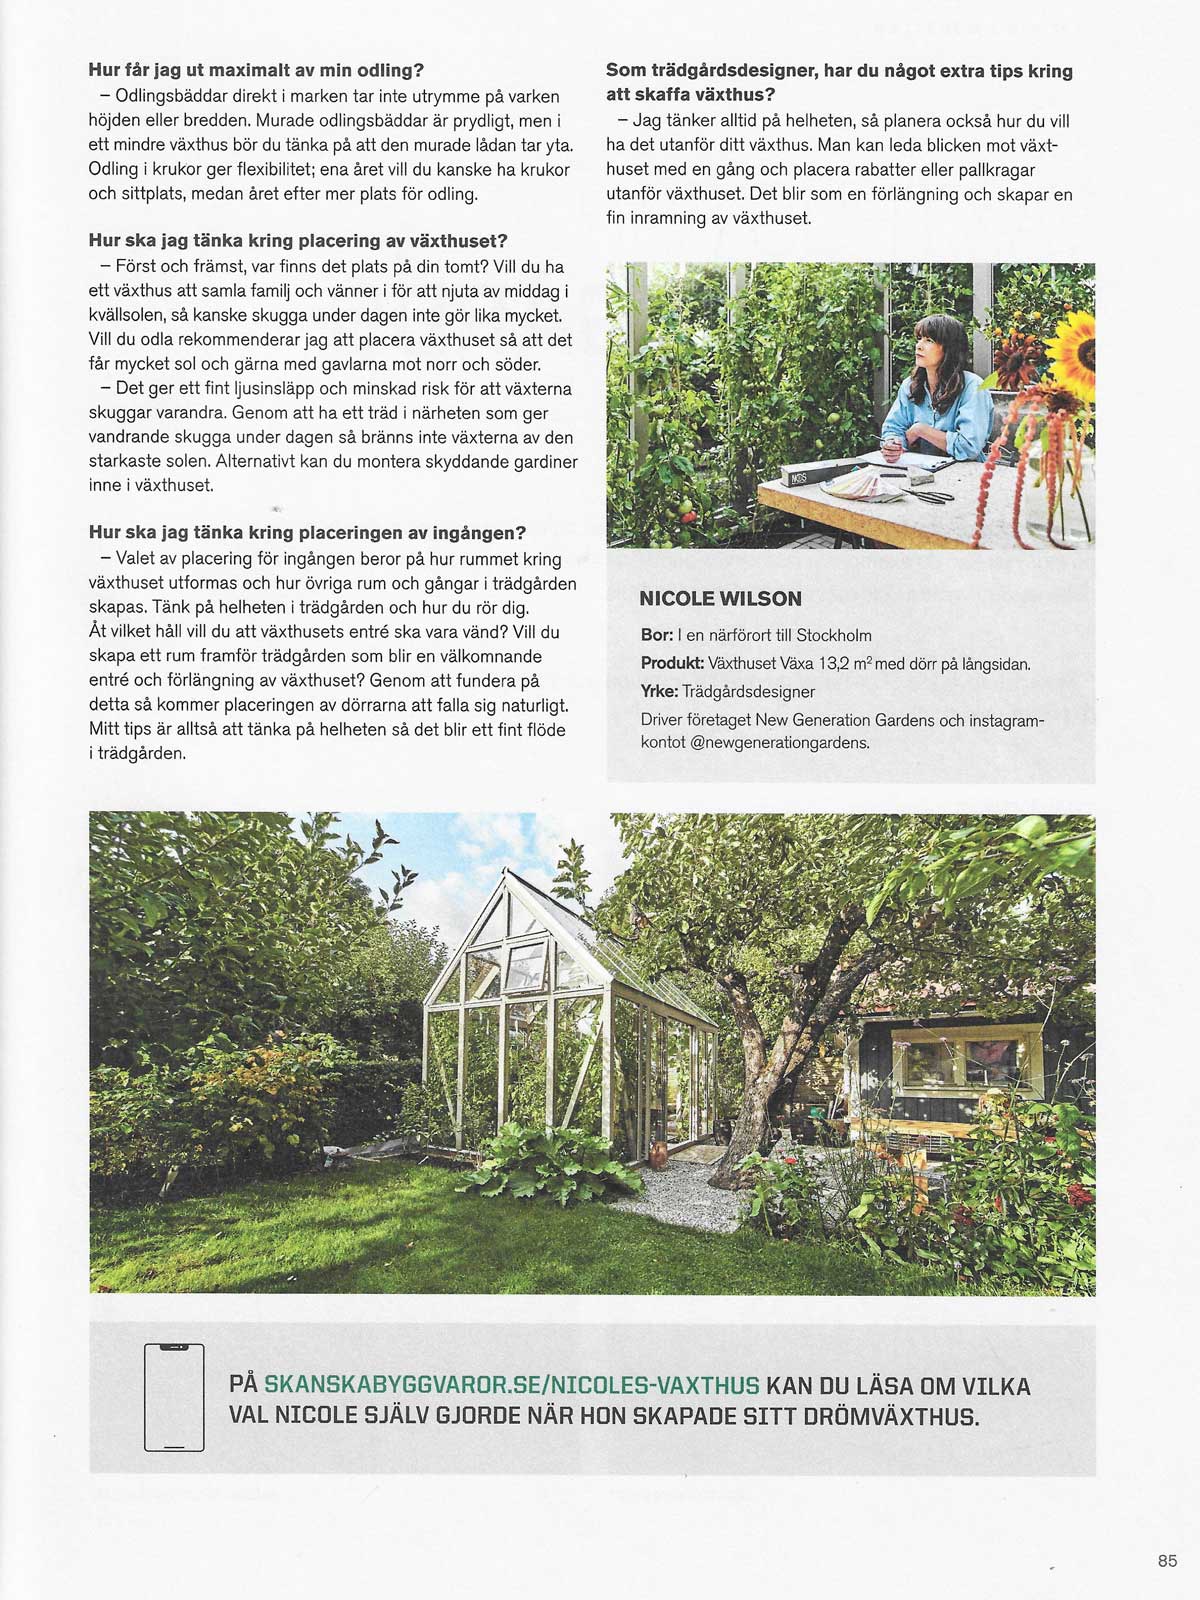 nicole wilson new generation gardens trädgårdsdesigner trädgårdsdesign trädgårdsarkitekt skånska byggvaror